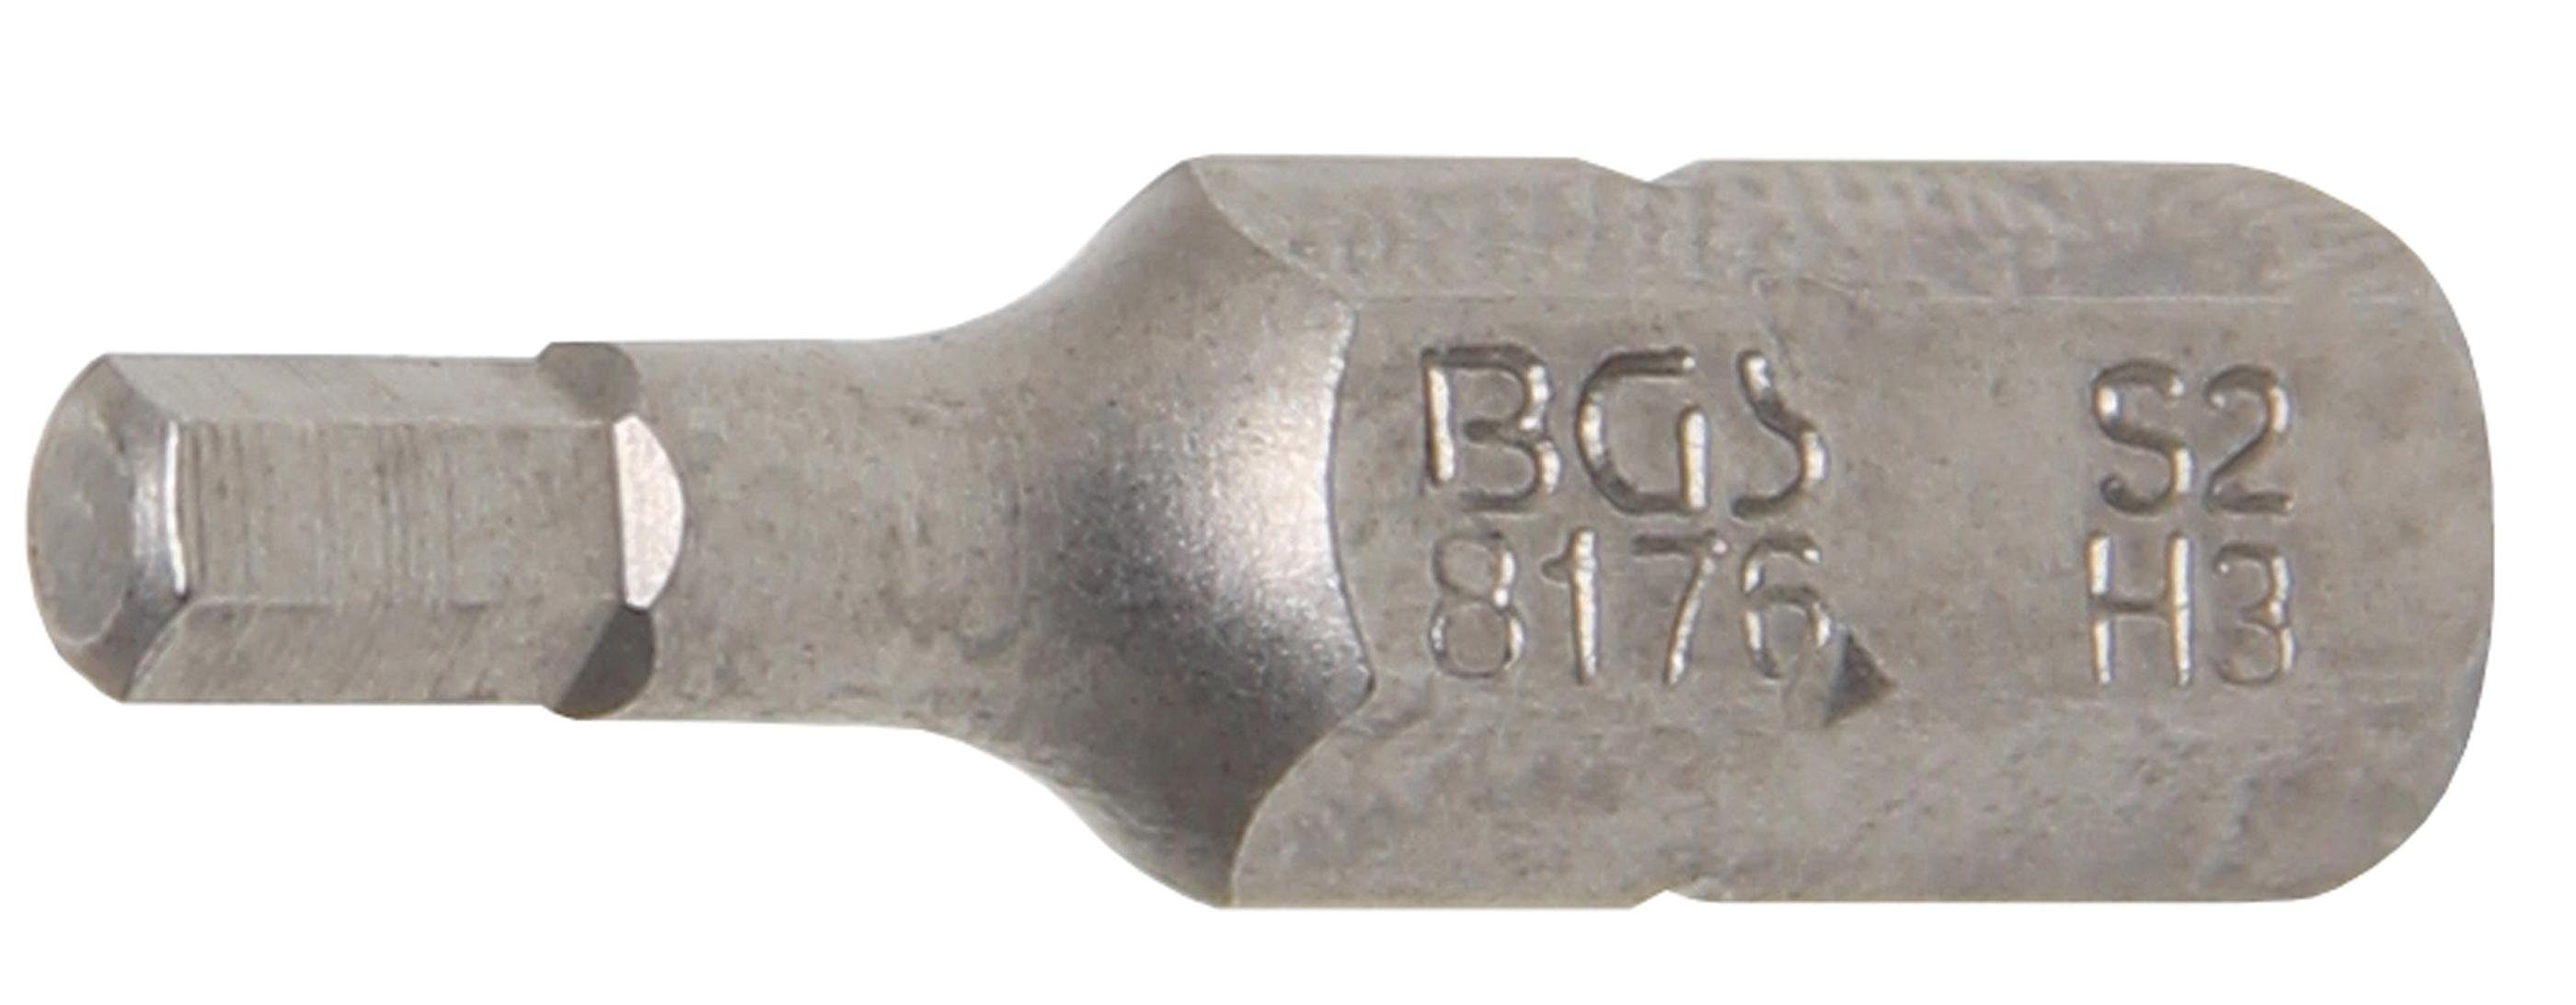 BGS technic Sechskant-Bit Bit, Antrieb Außensechskant 6,3 mm (1/4), Innensechskant 3 mm